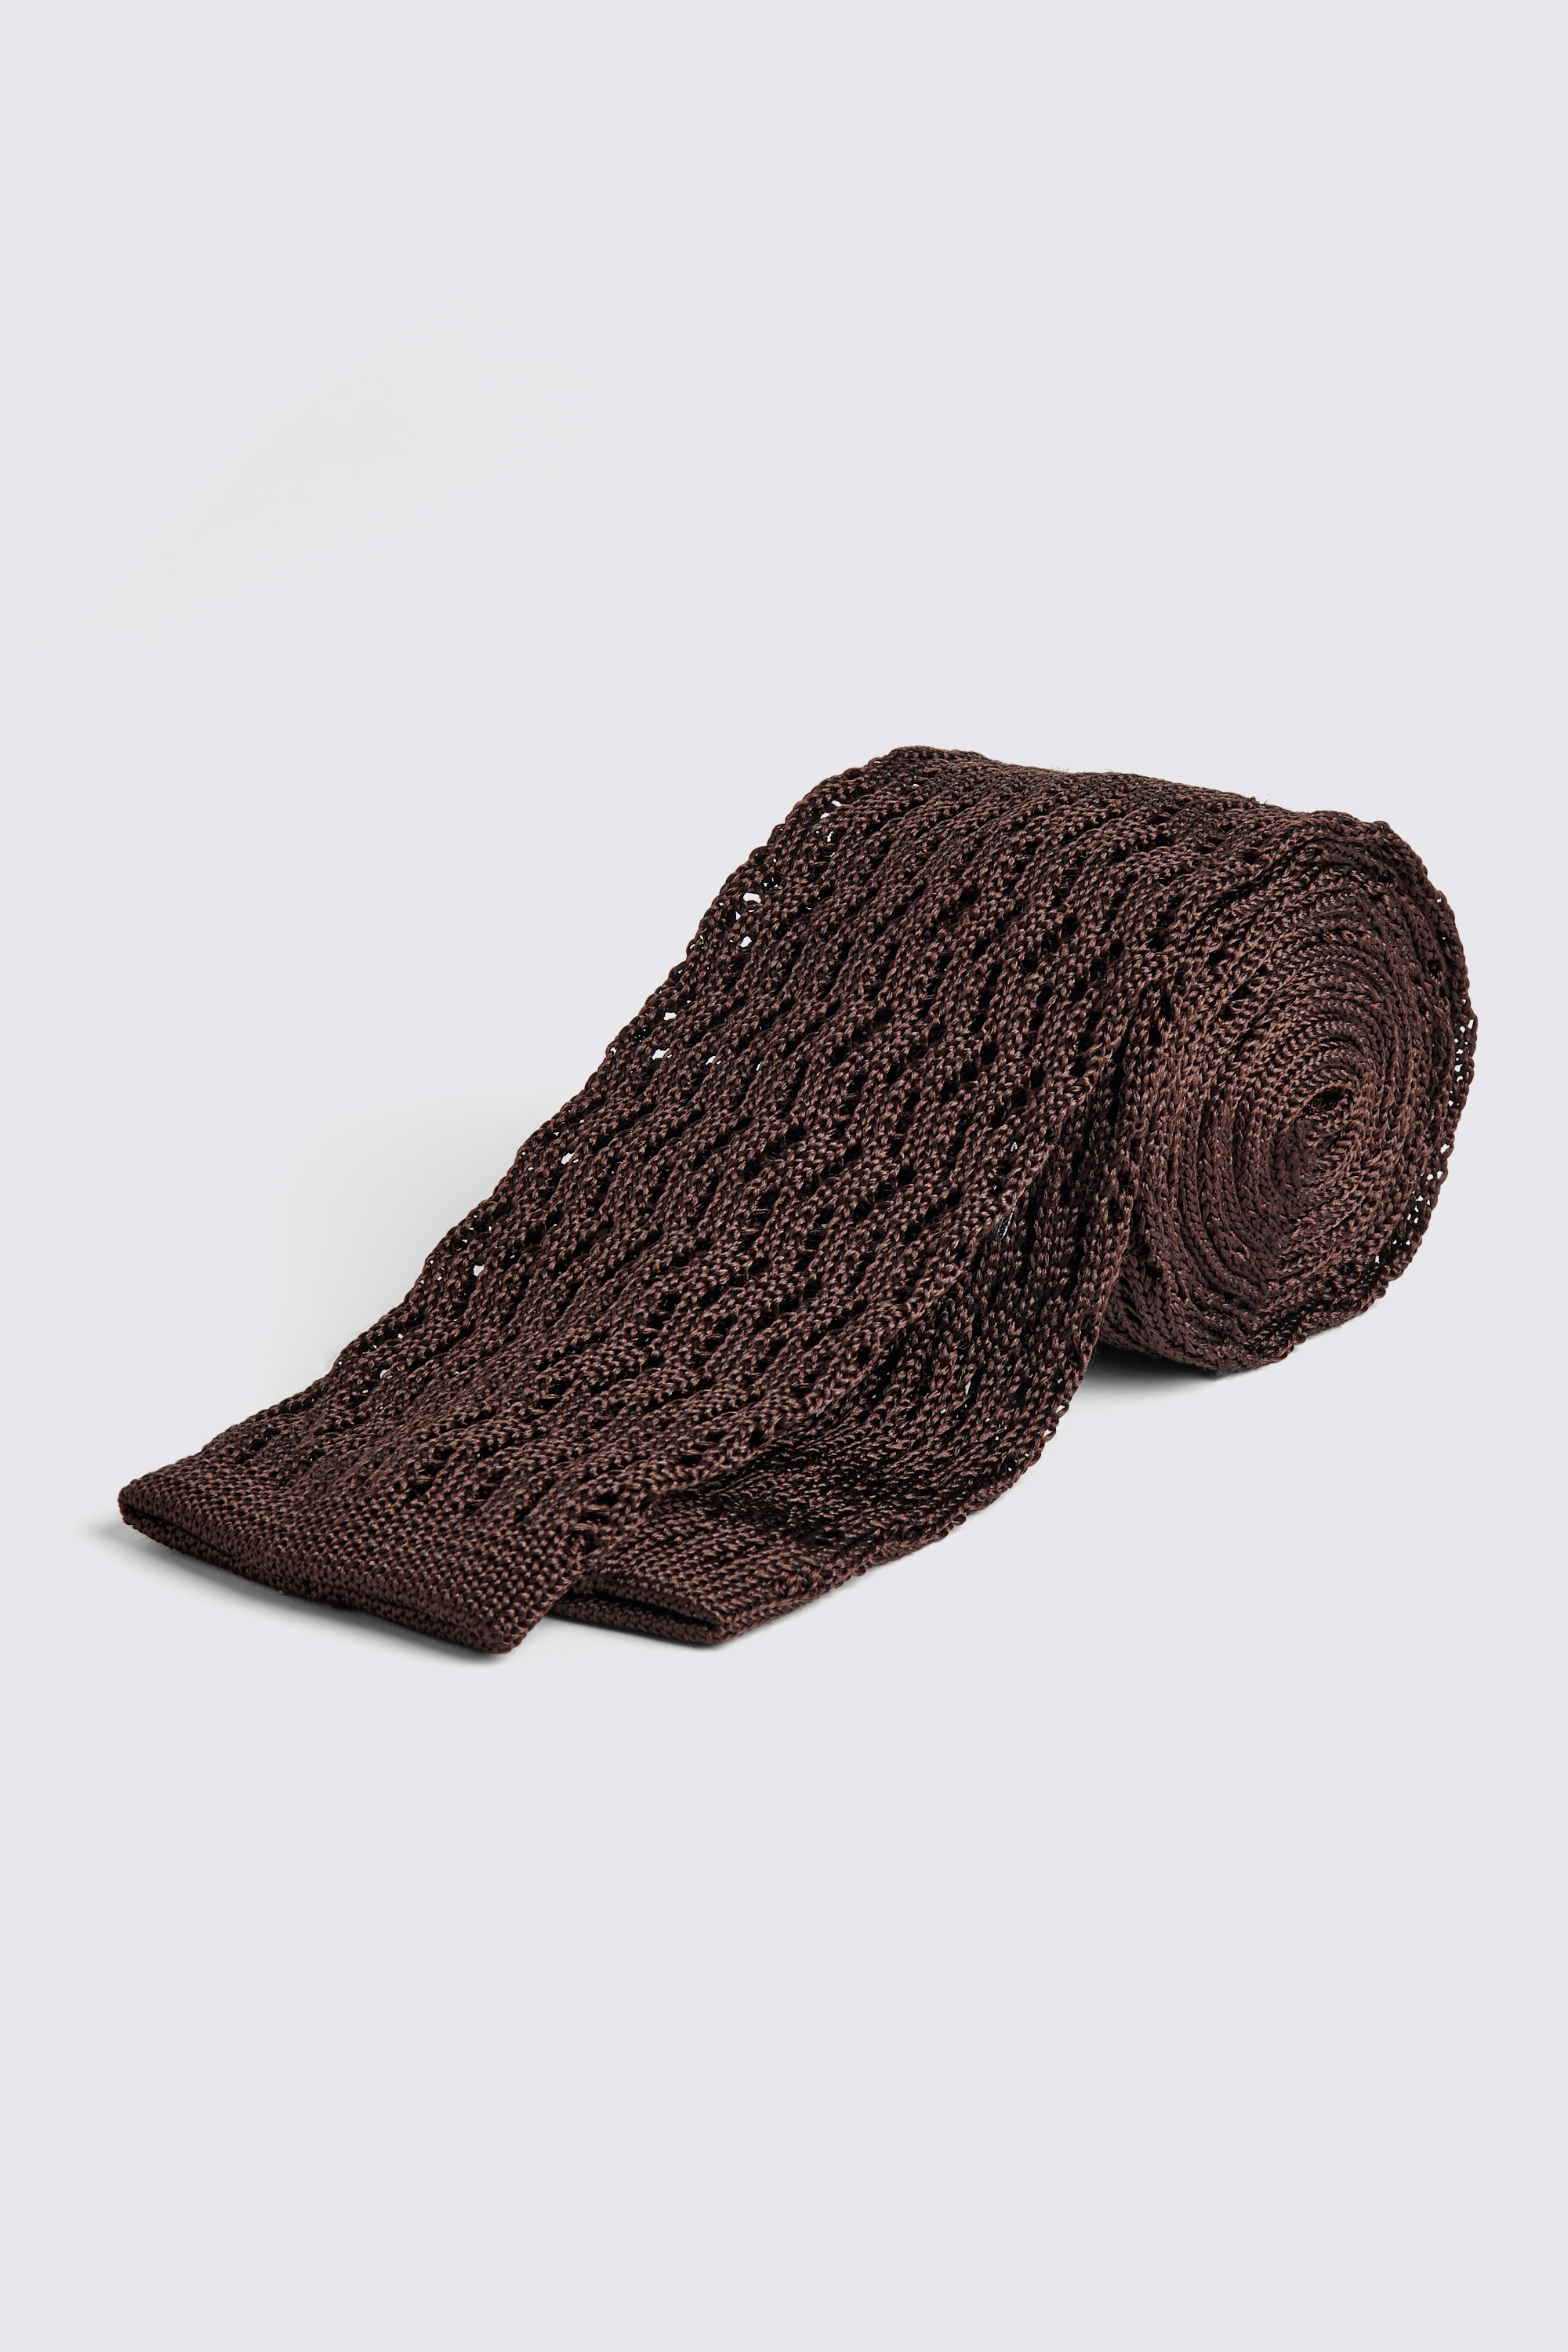 Chocolate Zigzag Silk Knit Tie | Buy Online at Moss